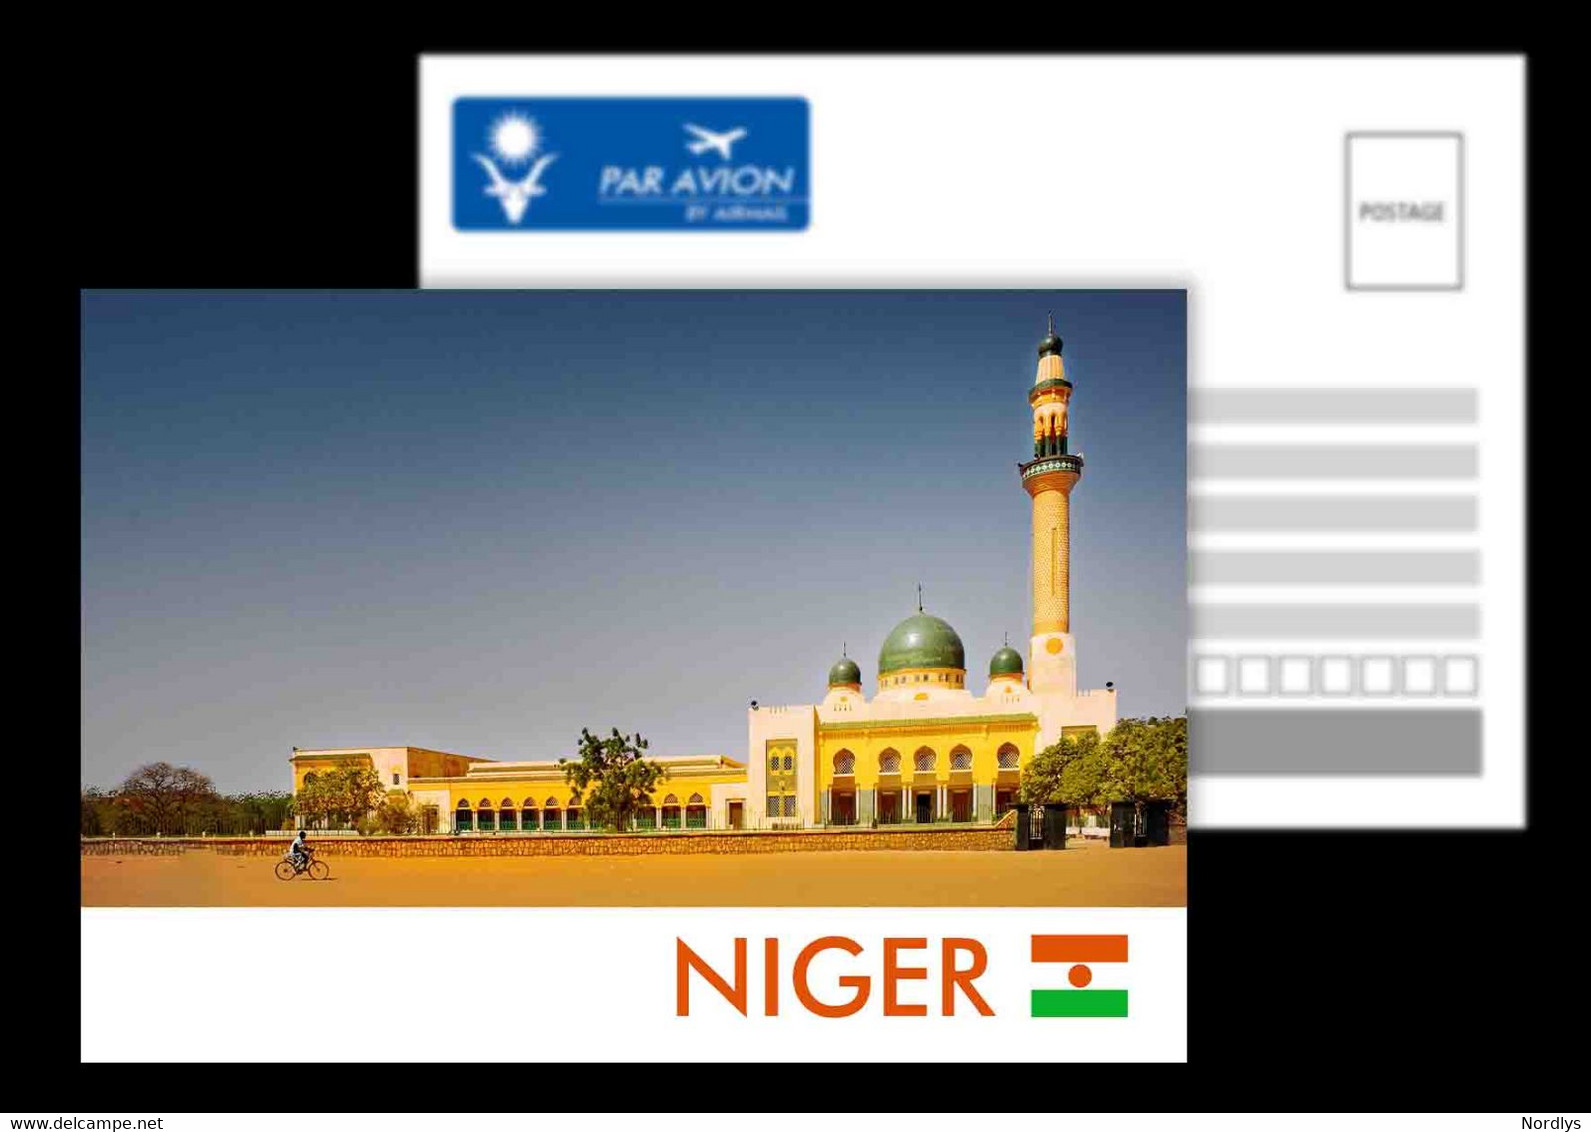 Niger / Postcard /View Card - Niger